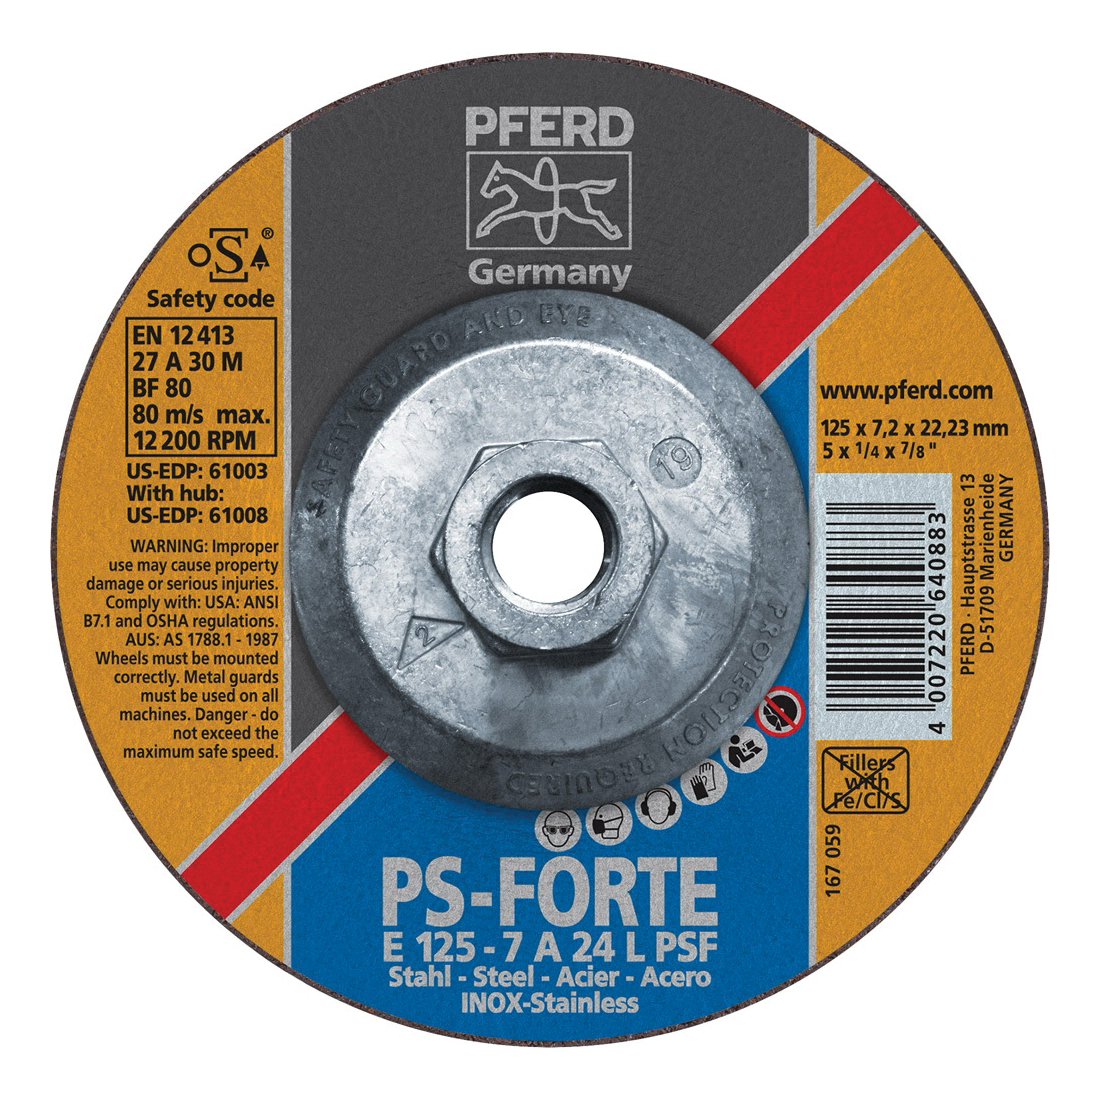 PFERD Universal Line PS-FORTE 61008 Depressed Center Wheel, 5 in Dia x 1/4 in THK, 24 Grit, Aluminum Oxide Abrasive